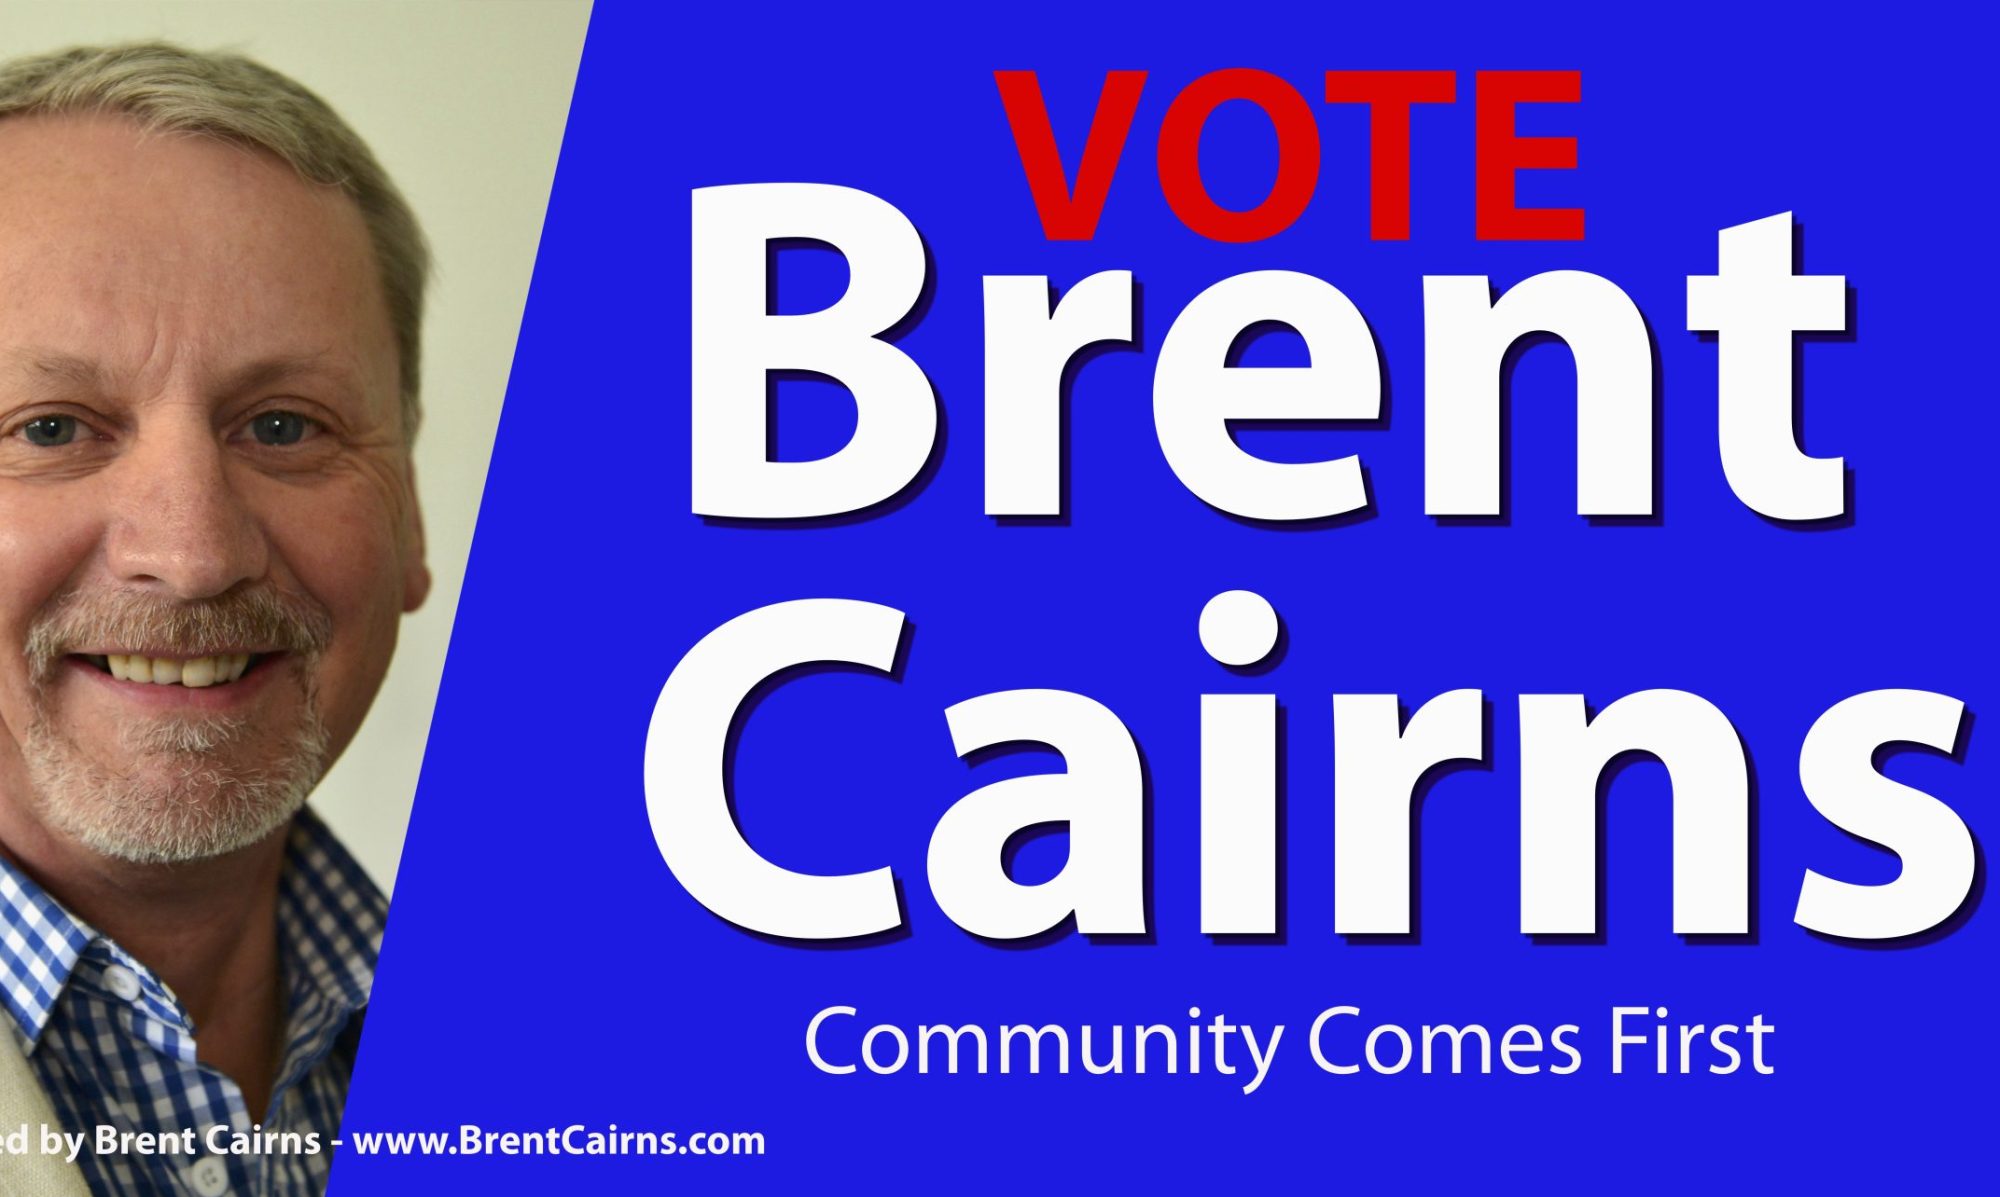 VOTE - Brent Cairns